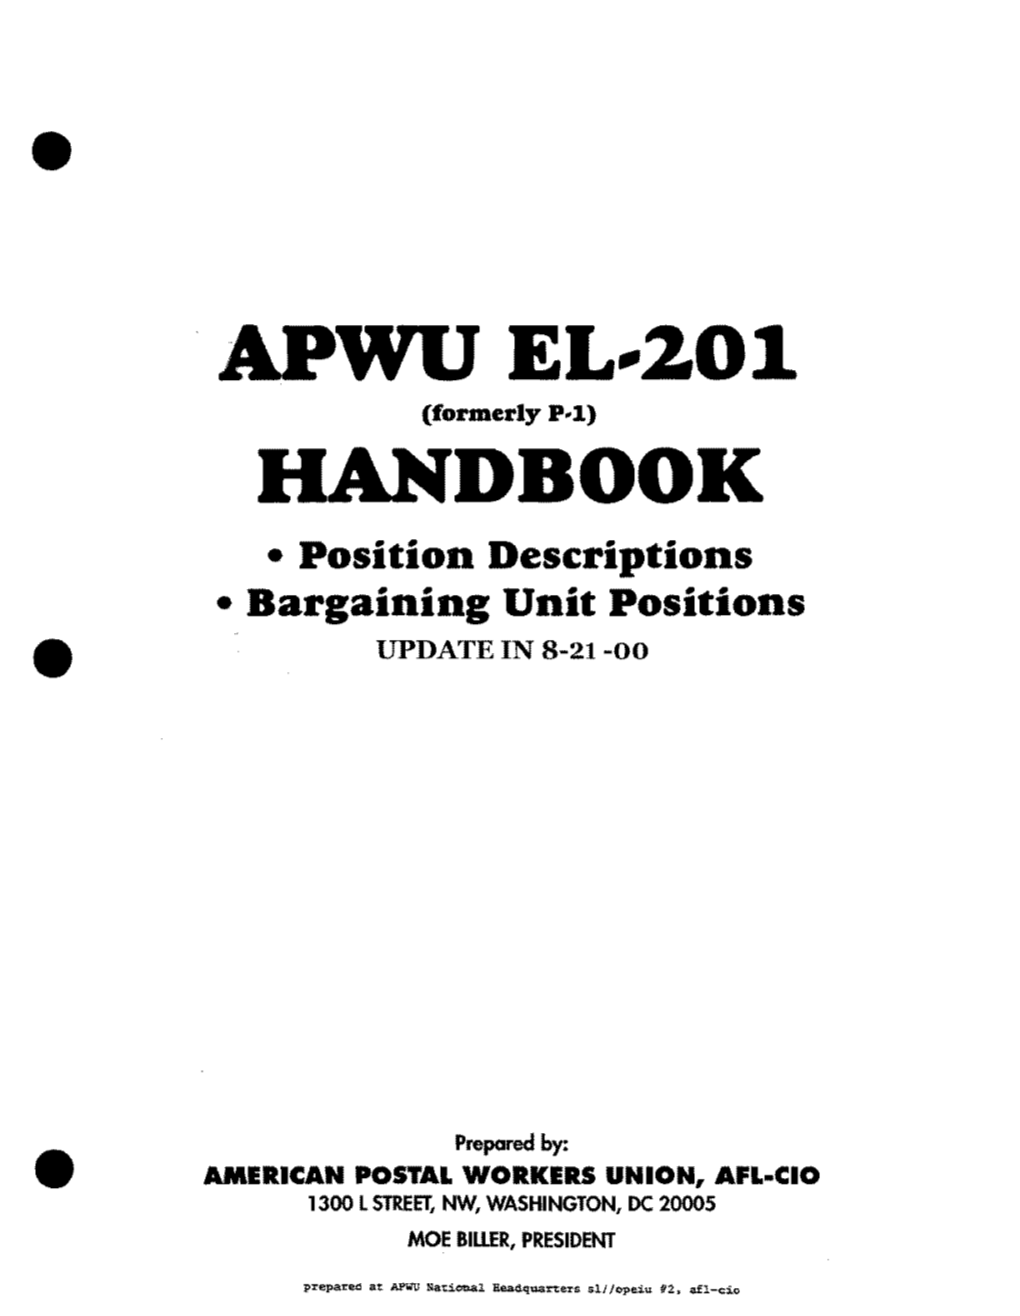 Position Descriptions APWU Edition